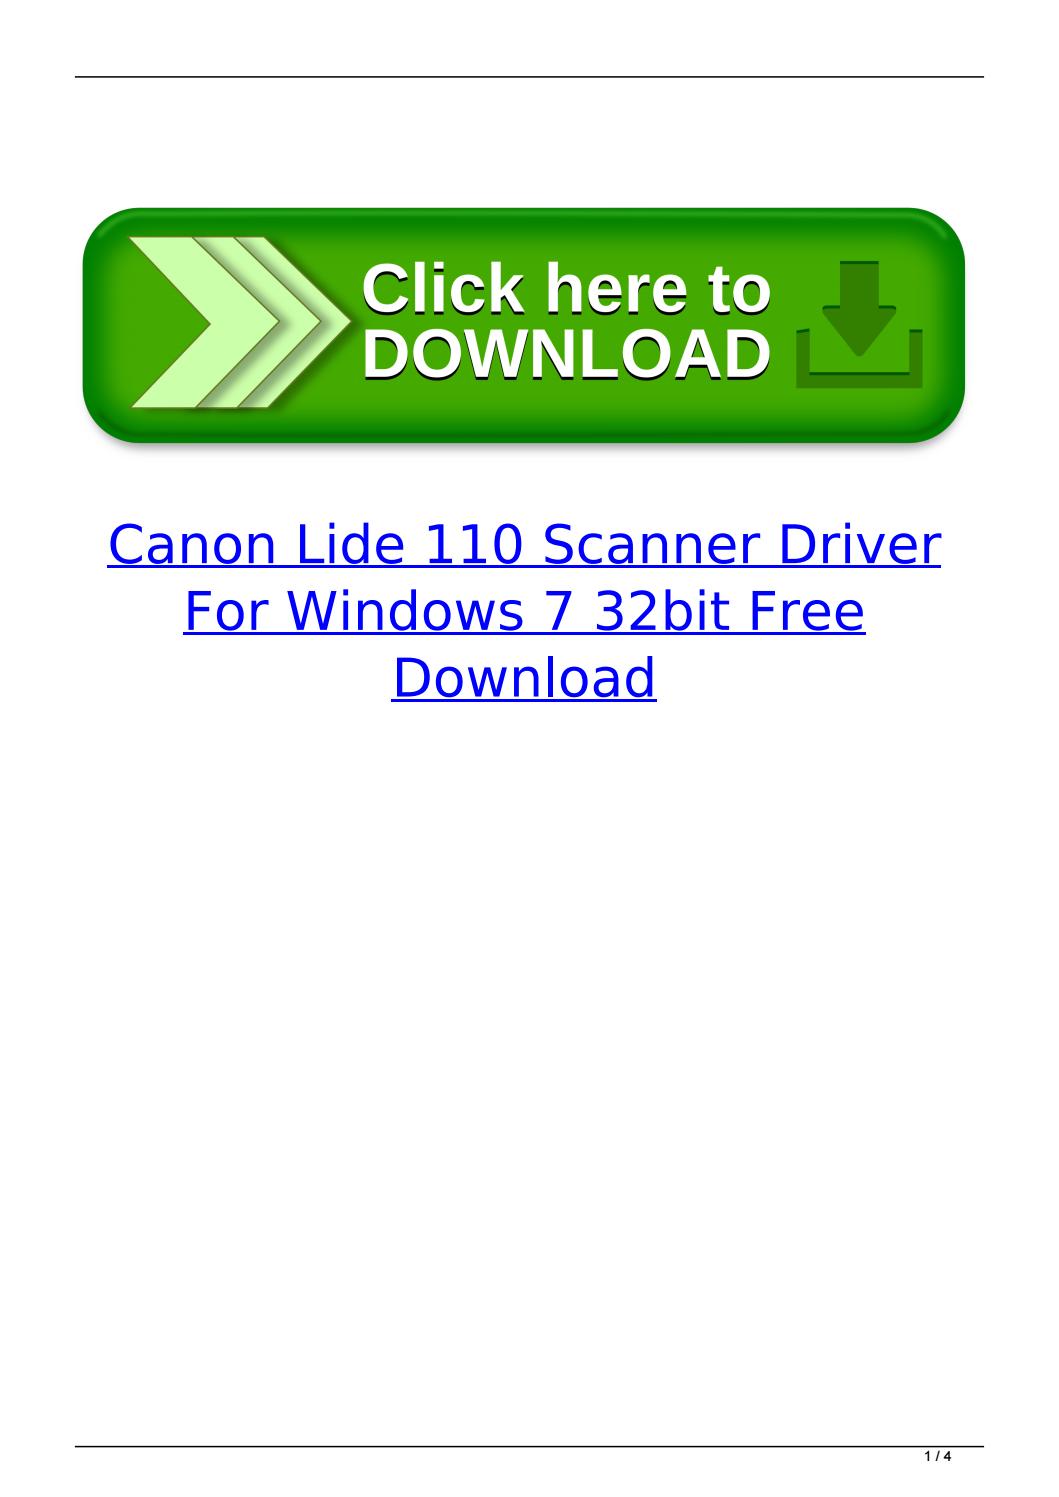 escaner canon lide 110 driver